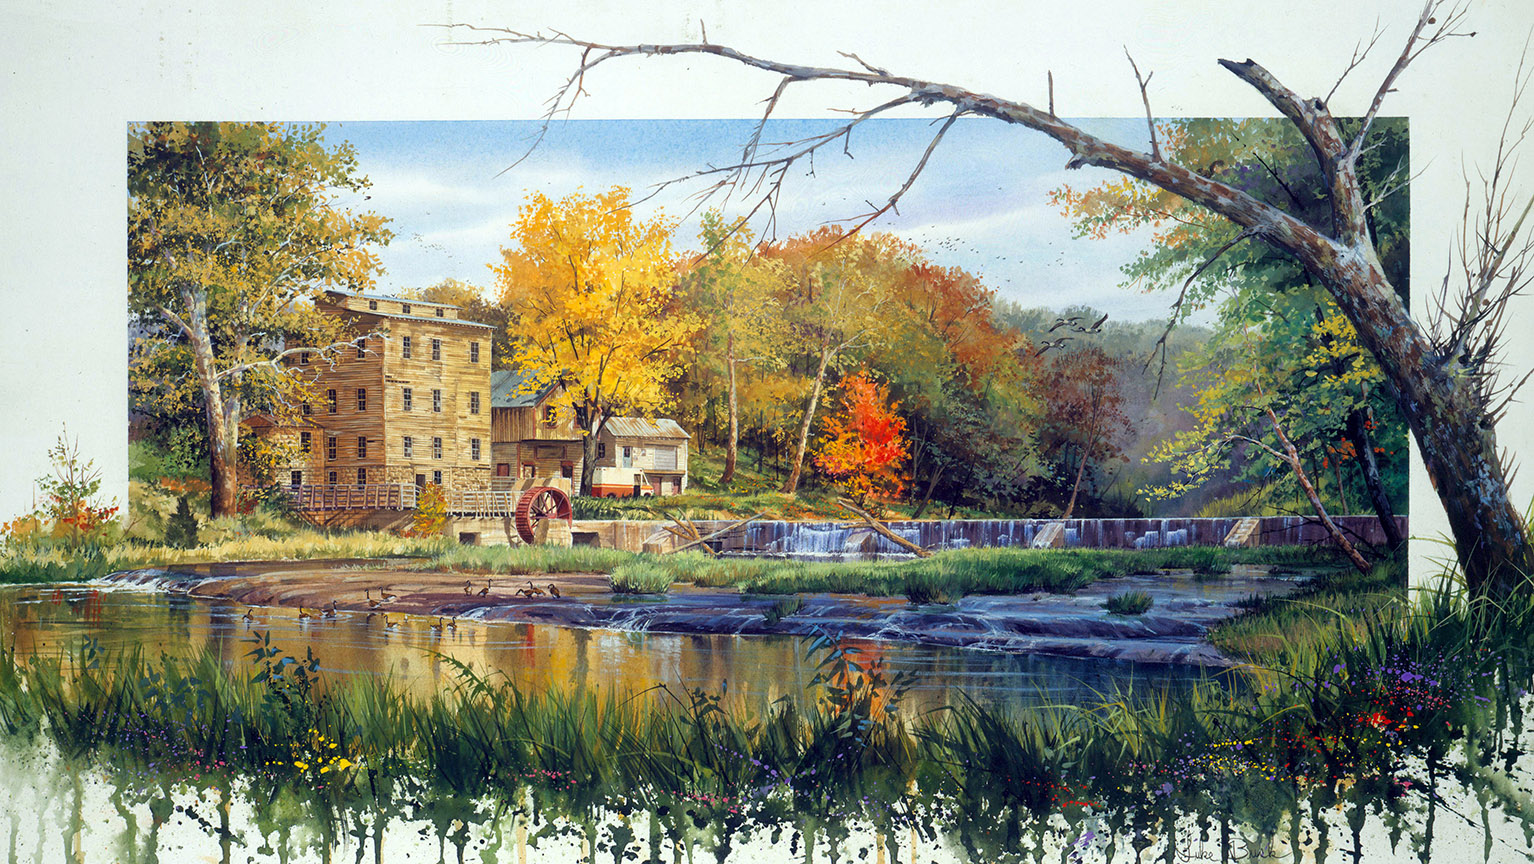 LB – Rural America – The Old Mill Pond © Luke Buck